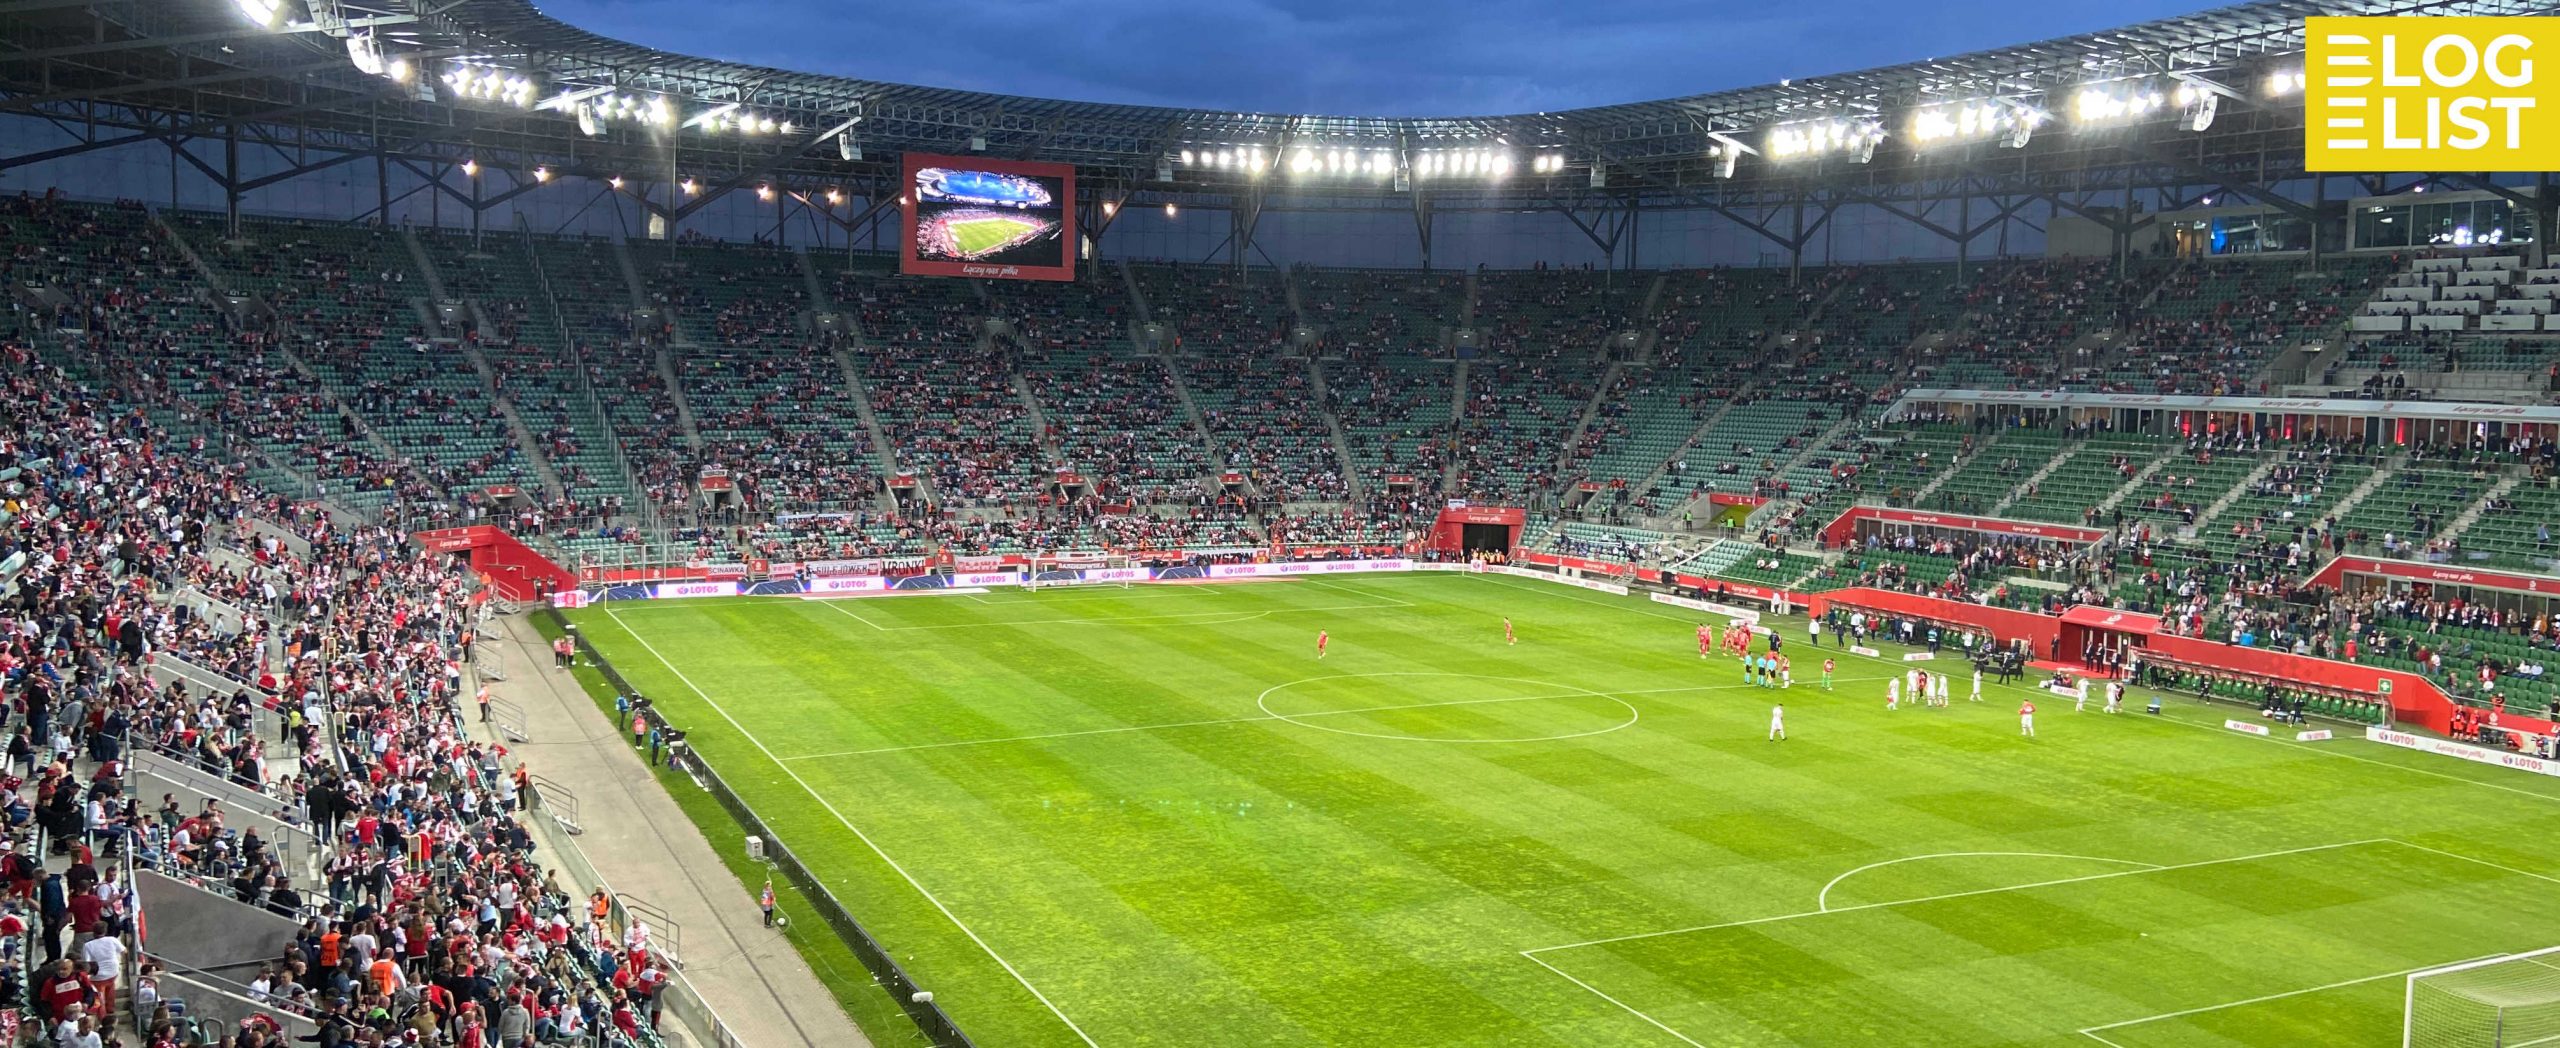 Wroclaw – Visiting the stadium